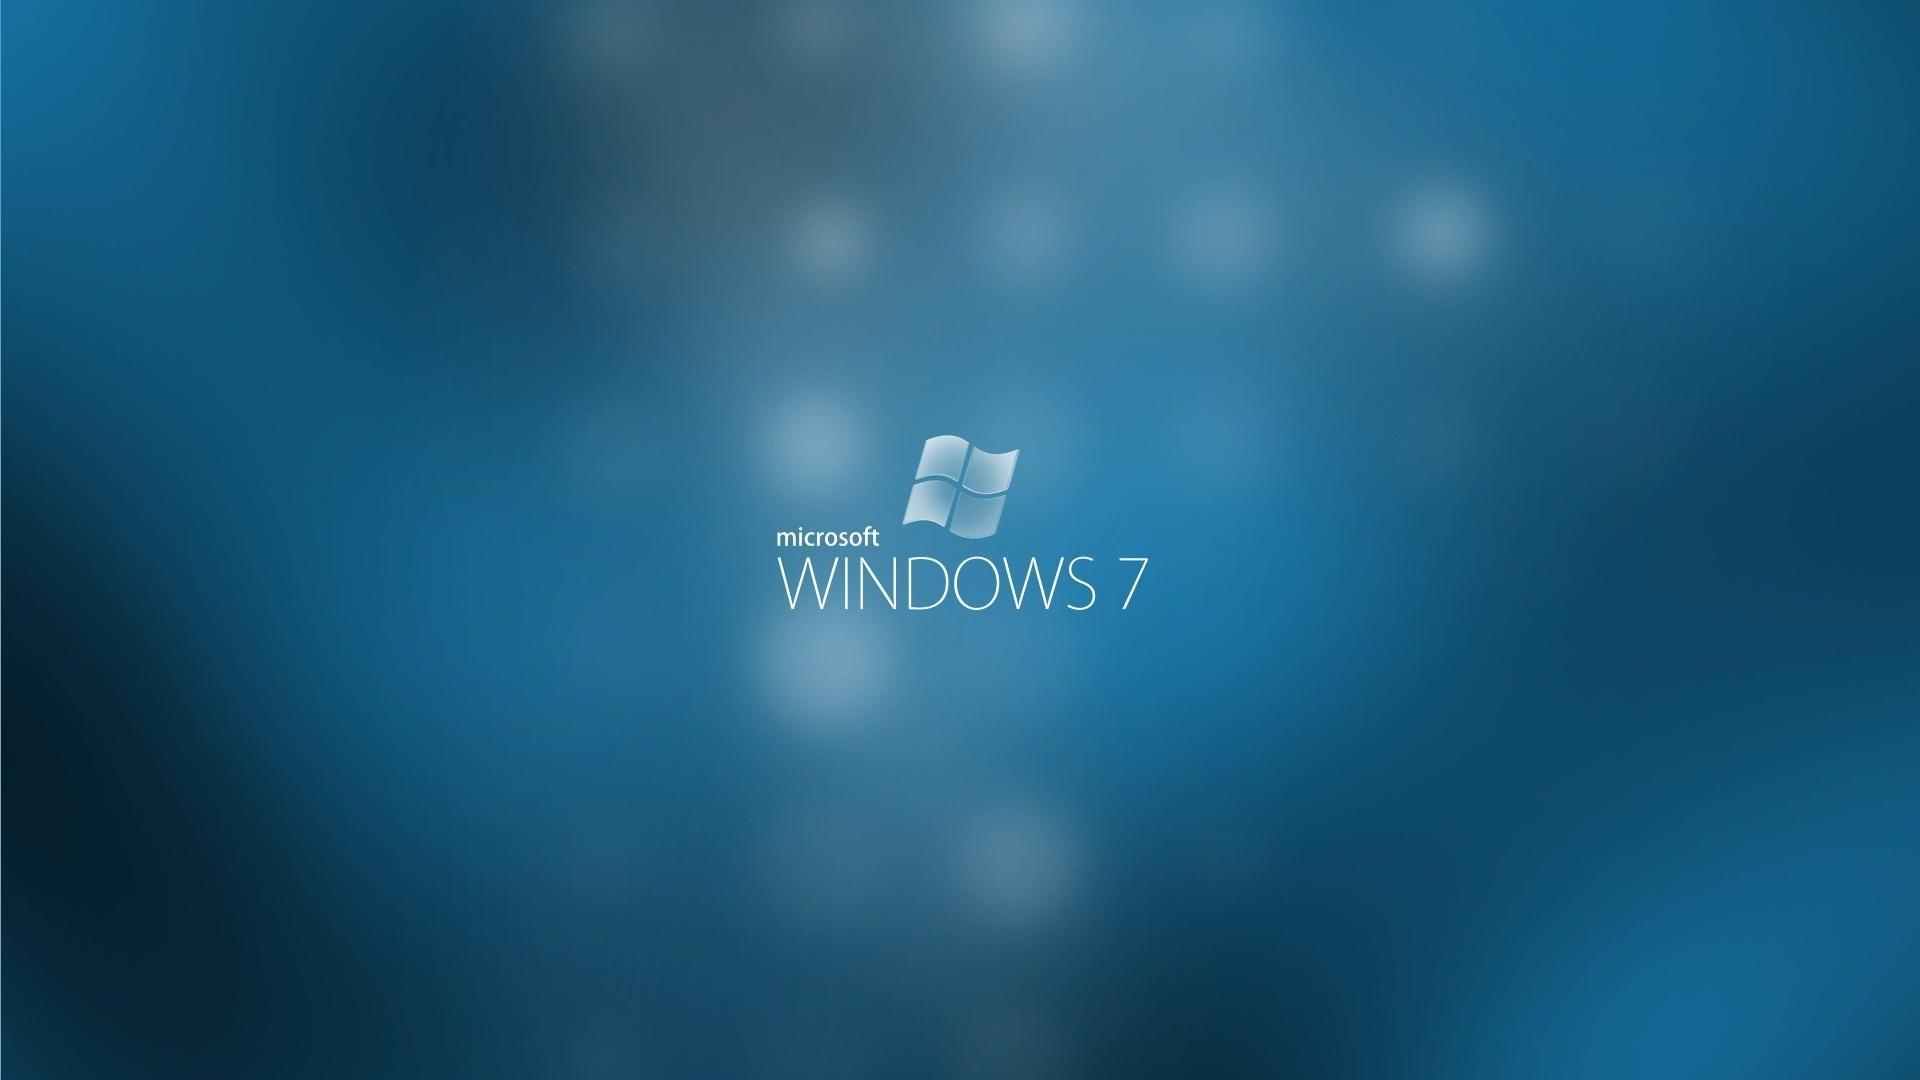 Windows 7 HD Wallpaper 1920 188990